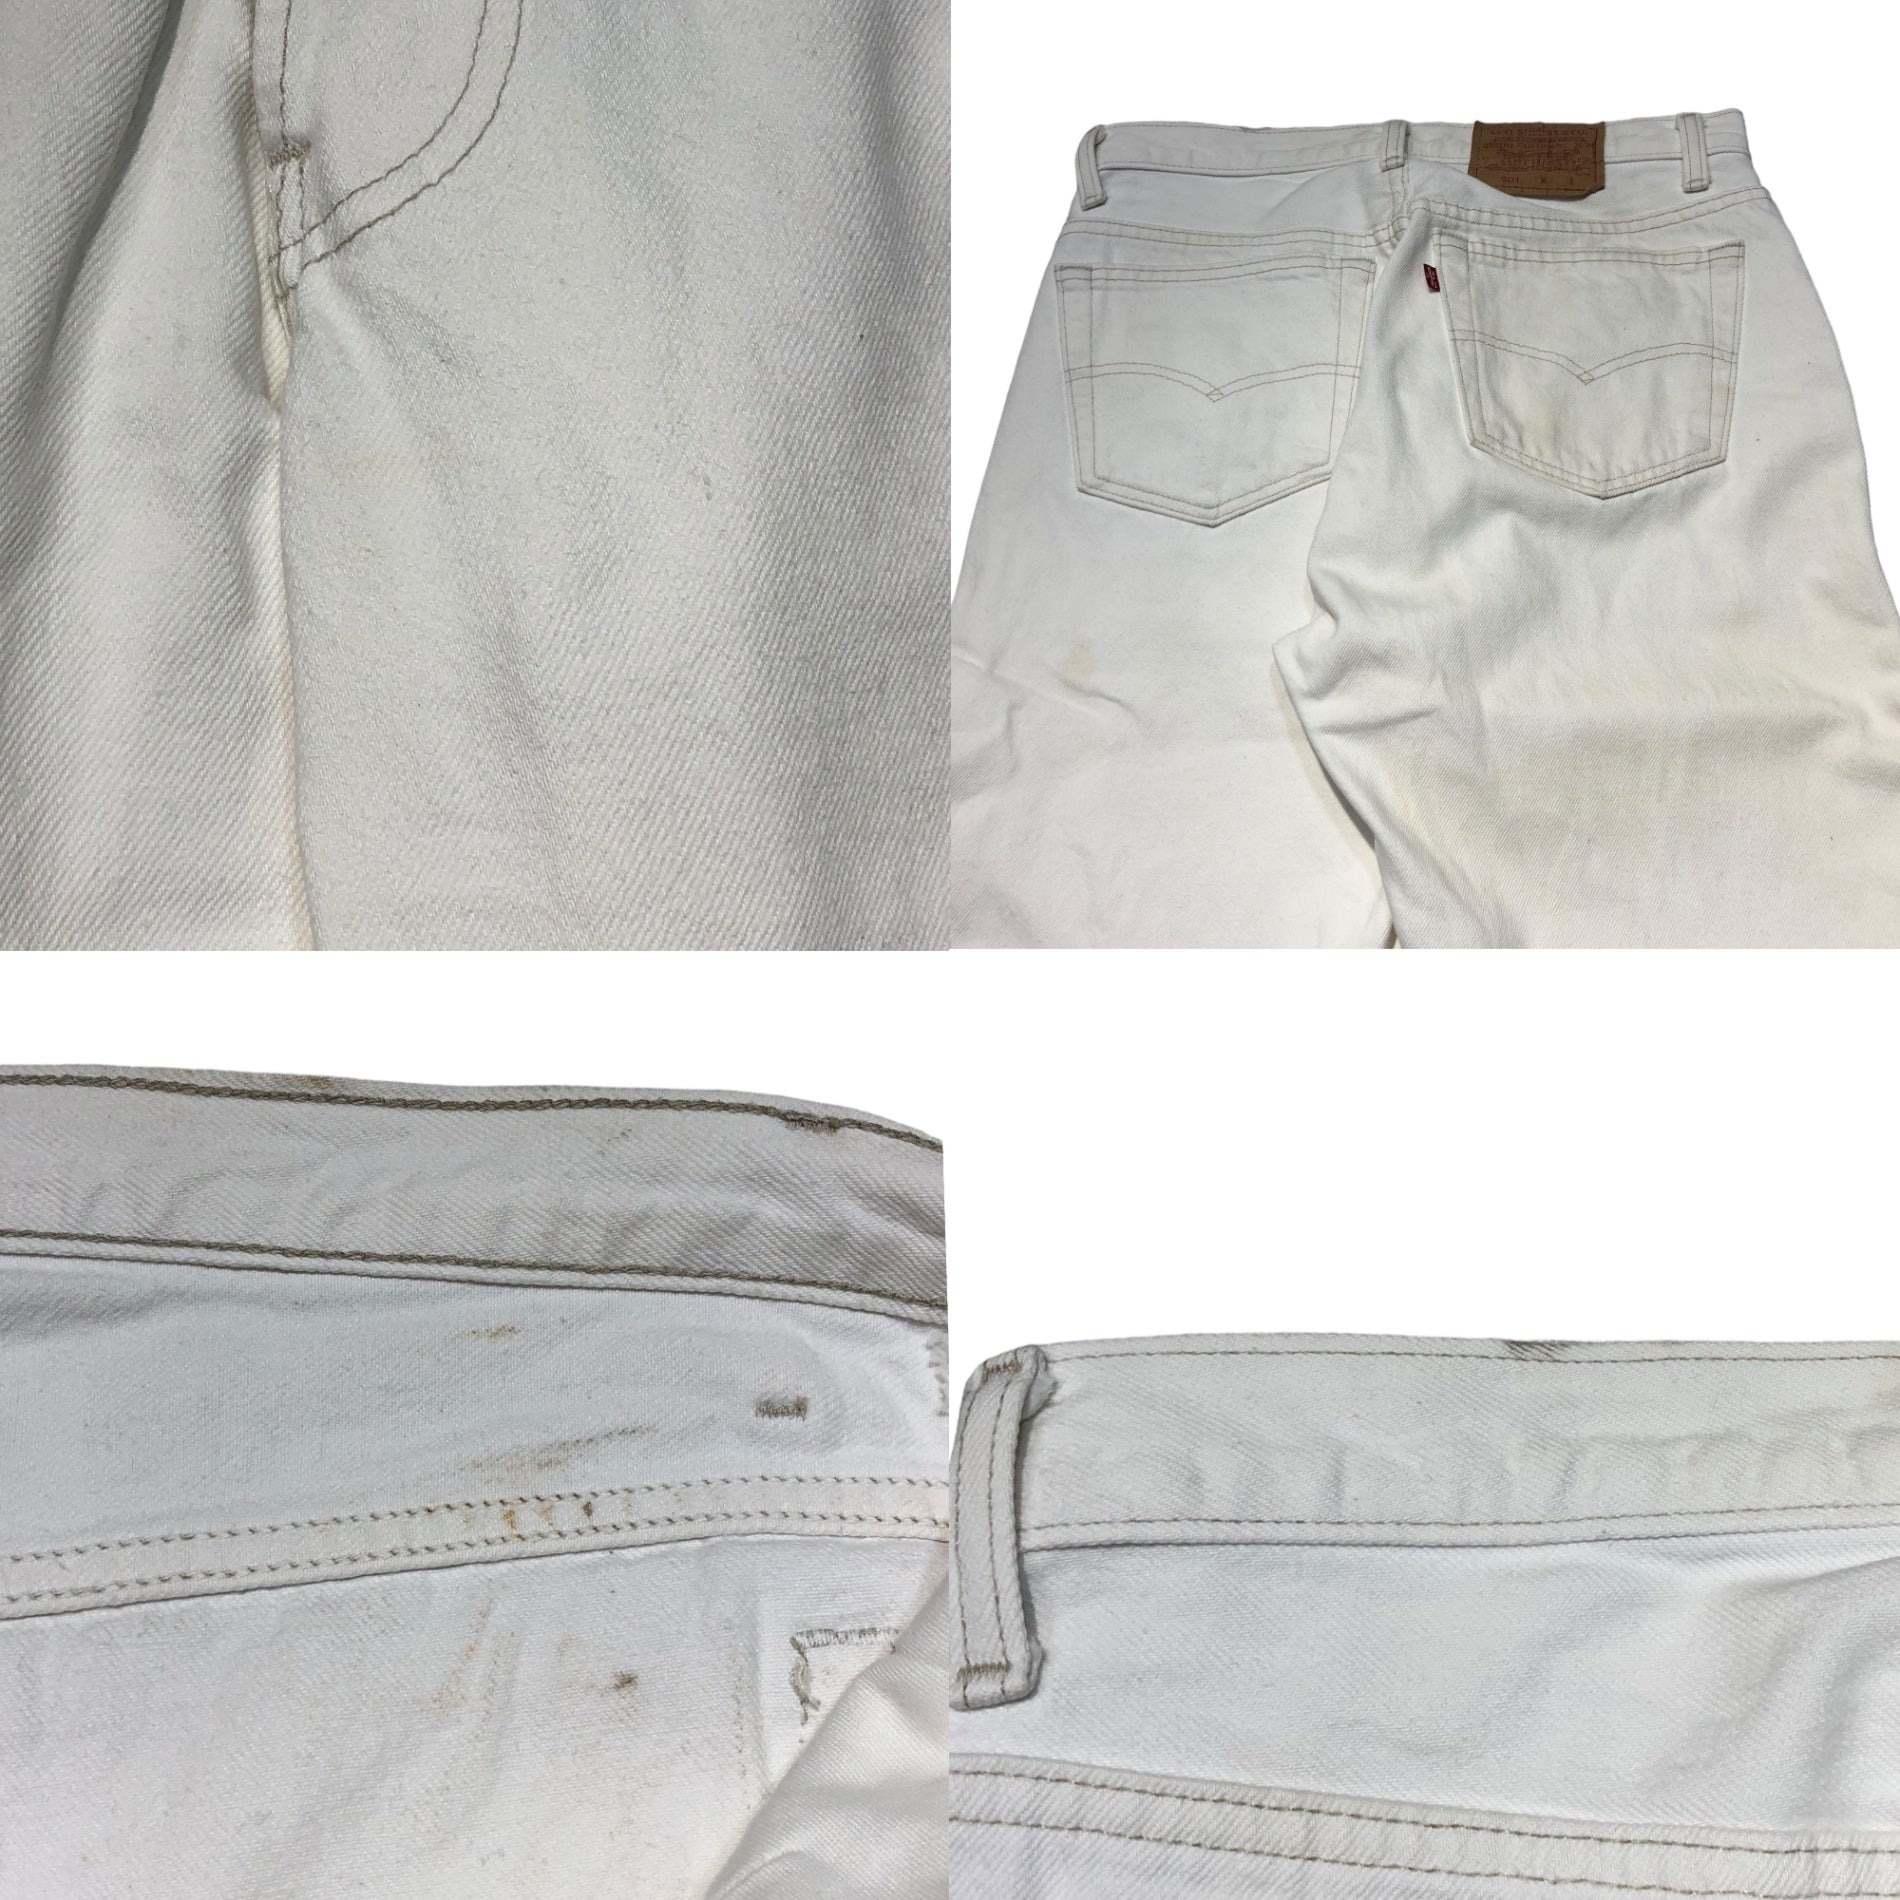 Levi's(リーバイス) 90's 501 white straight denim pants ホワイト ストレート デニム パンツ 501-0651 32/34 ホワイト 裏ボタン216 90年代 カナダ製